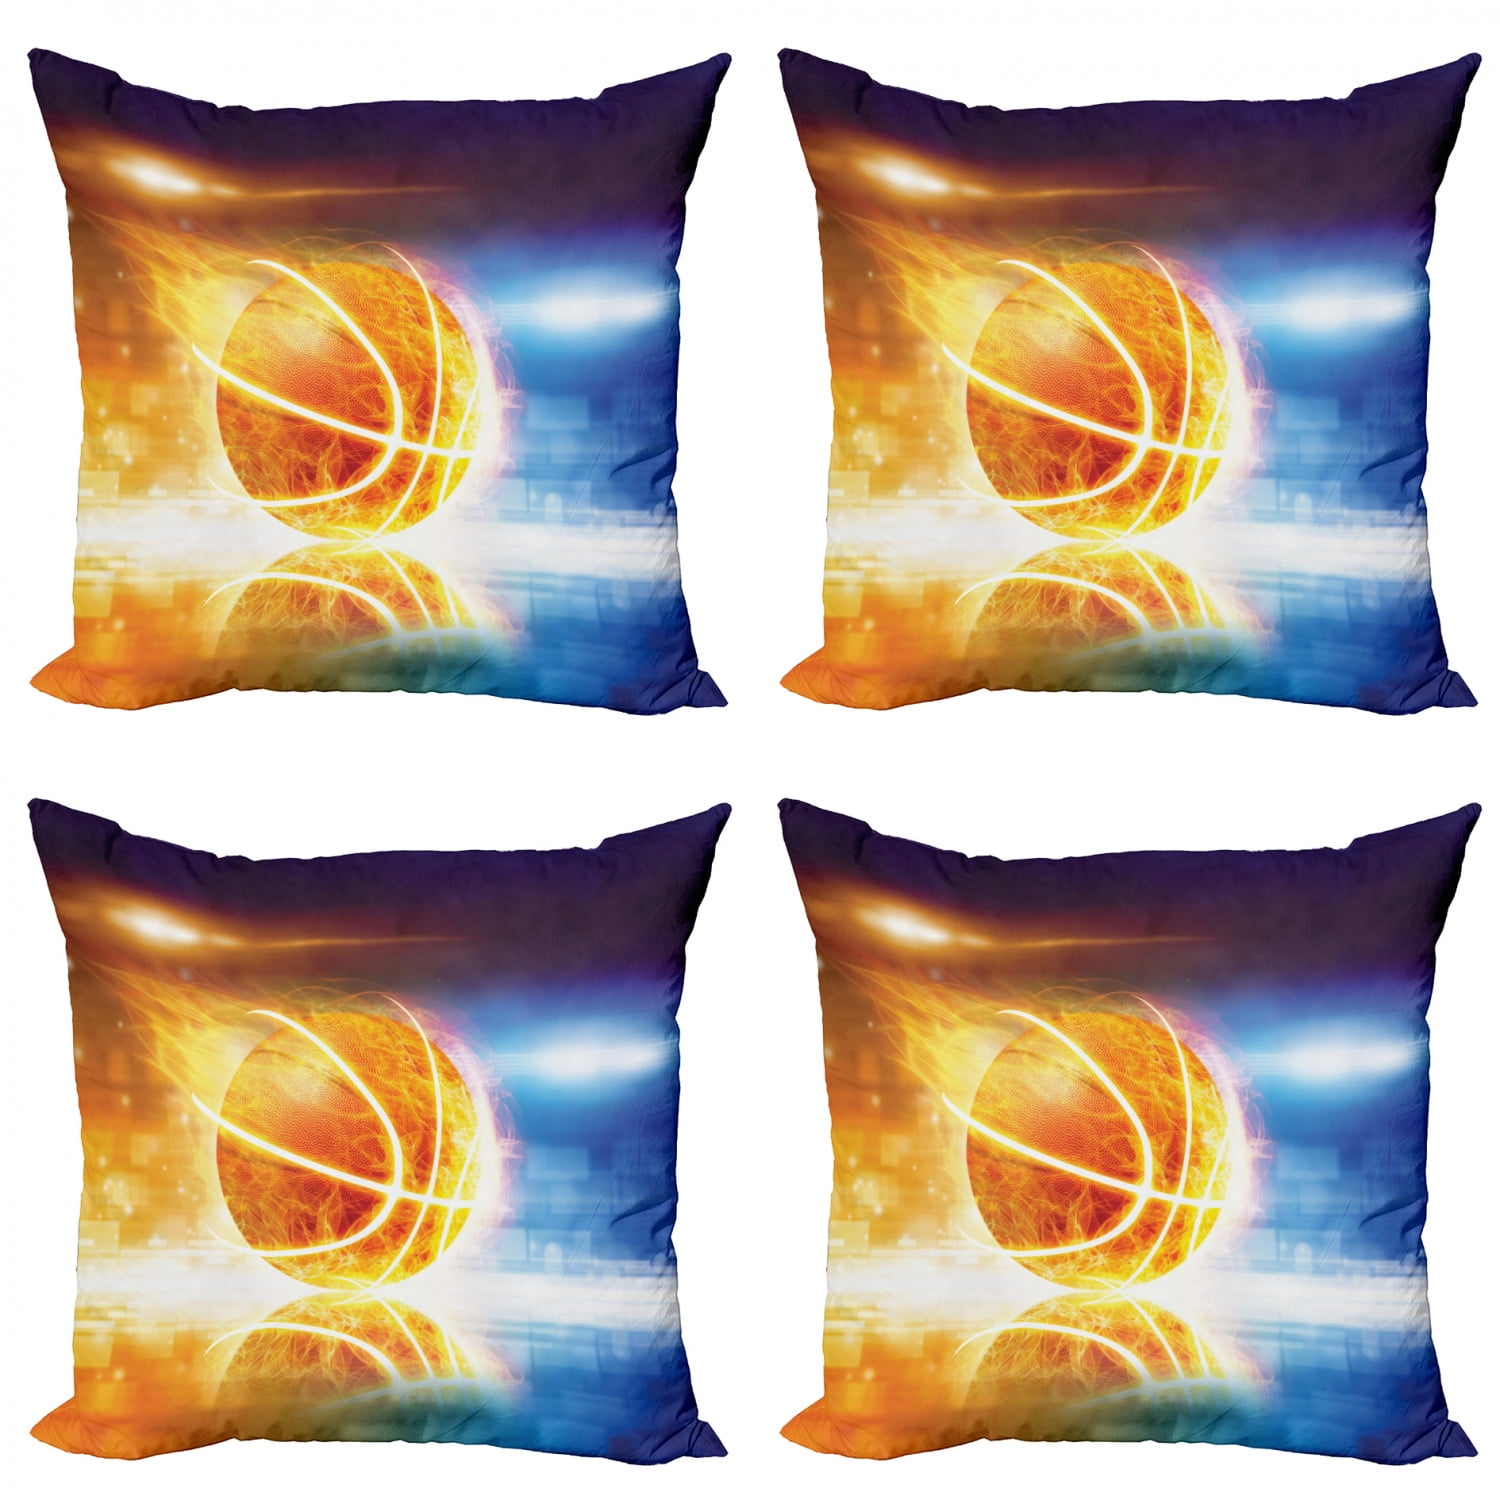 basketball throw pillow